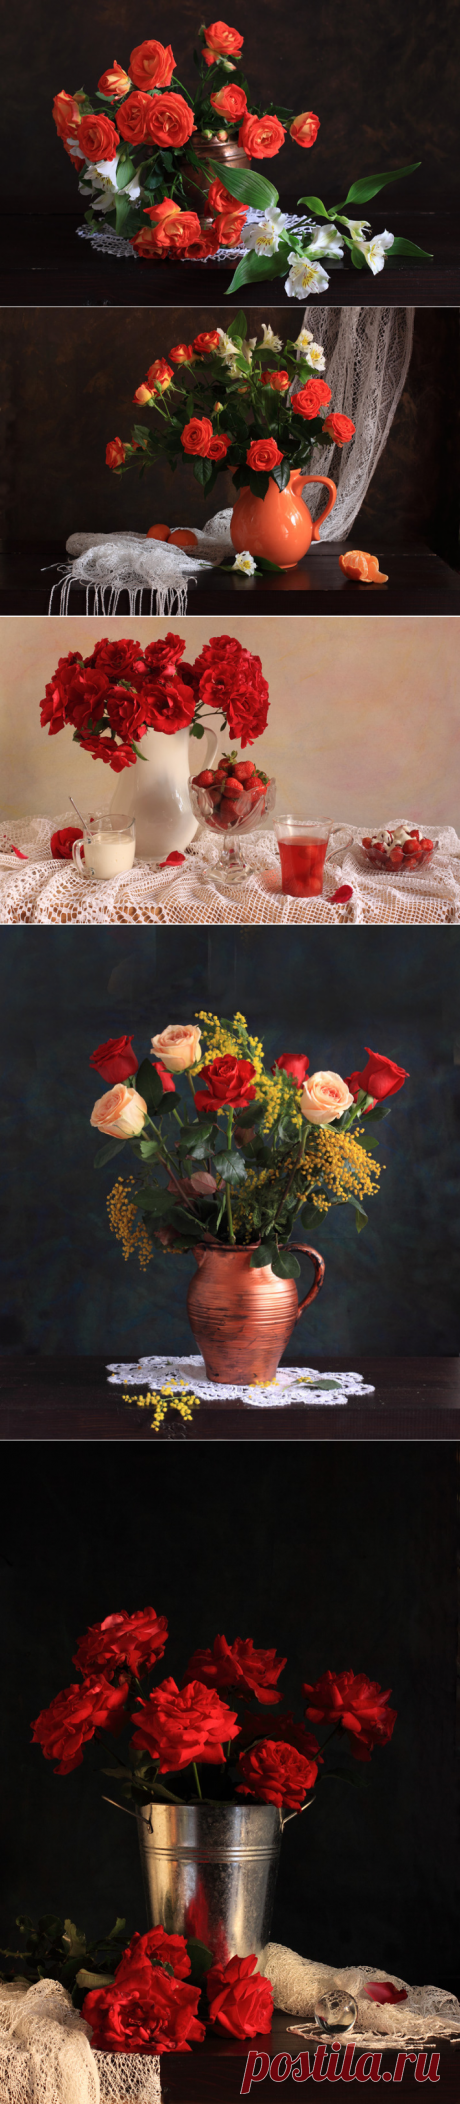 Натюрморты с розами от Натальи Панга.